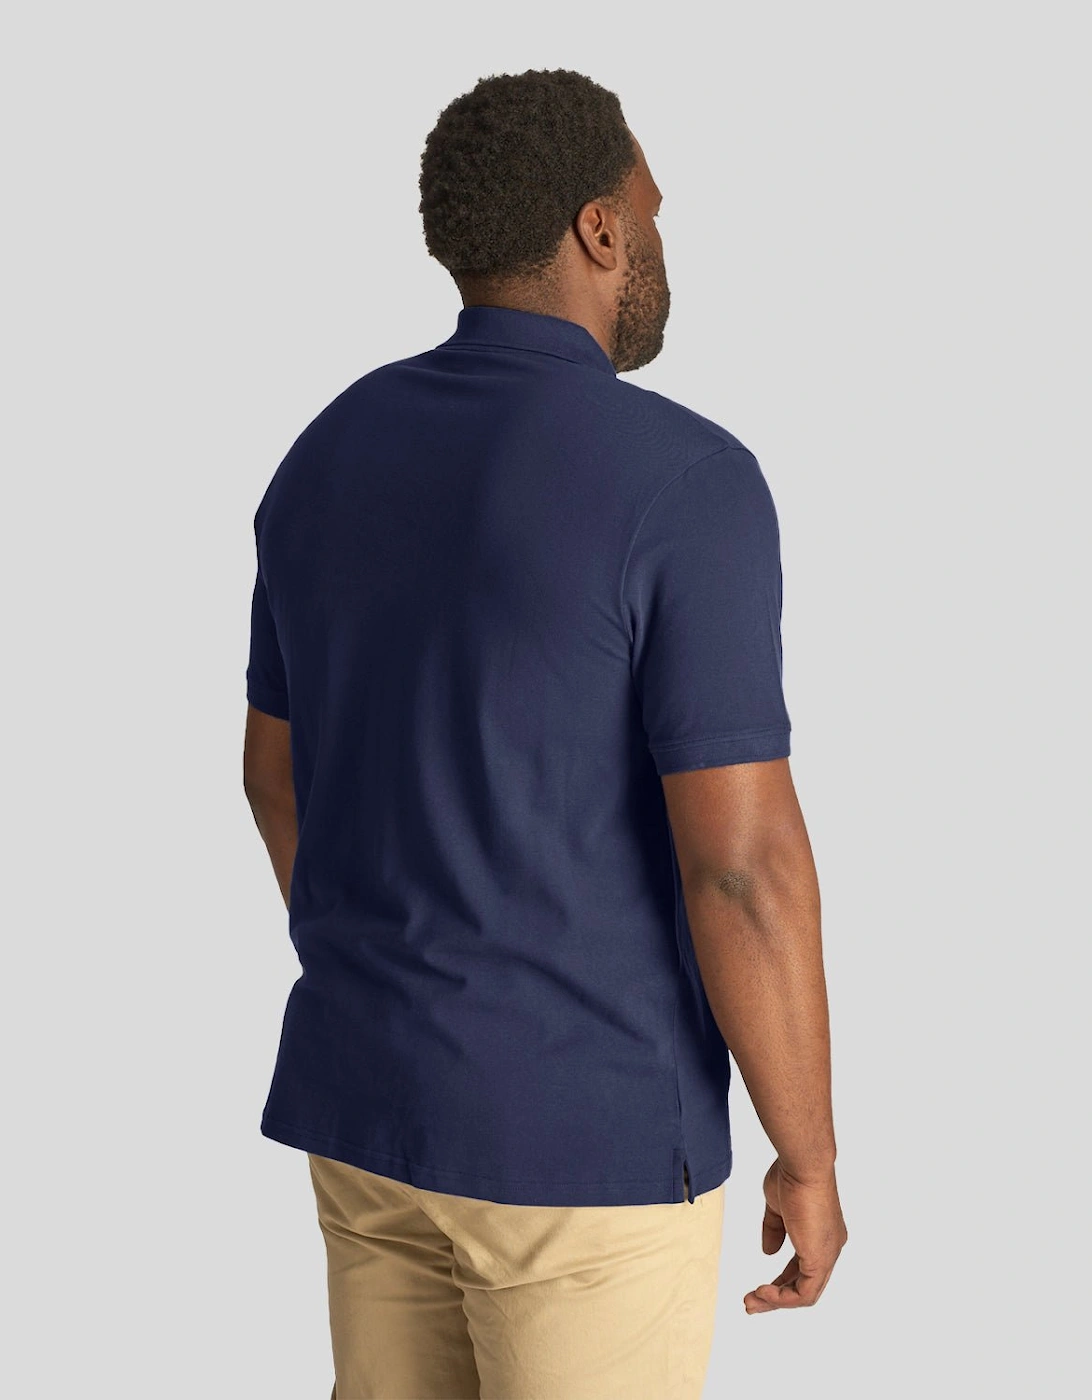 Plain Polo Shirt Plus